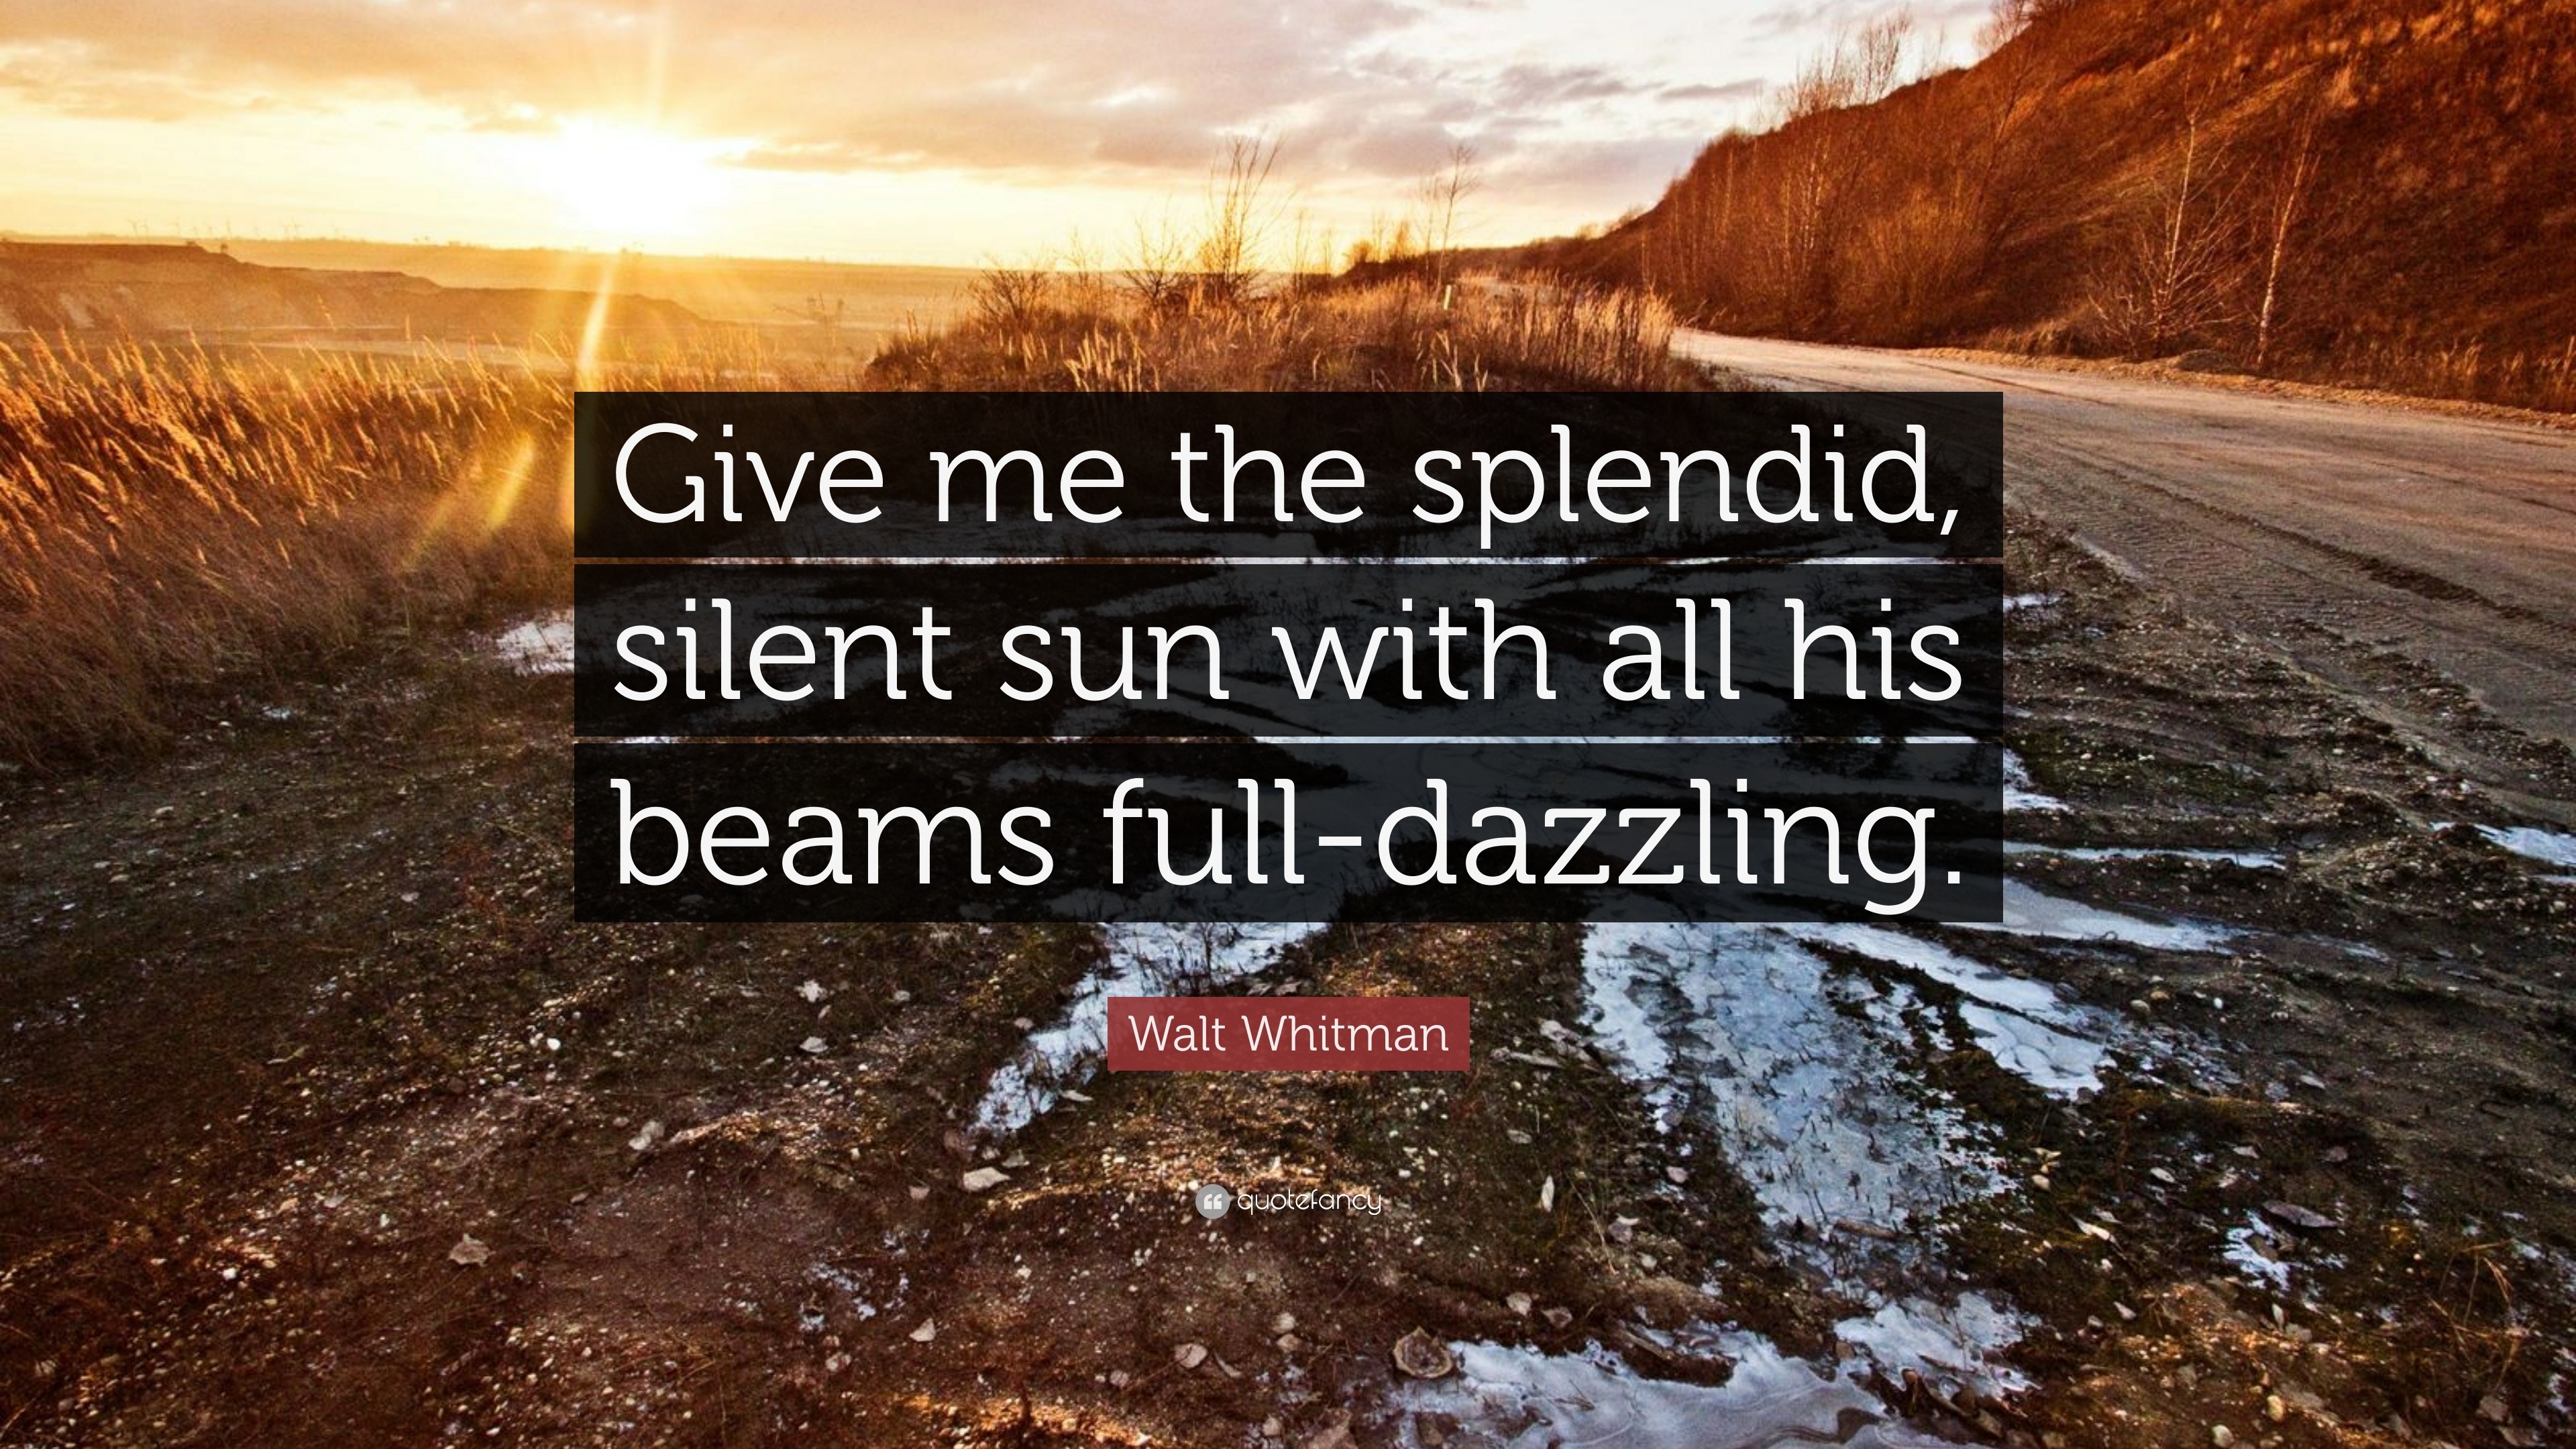 give me the silent splendid sun